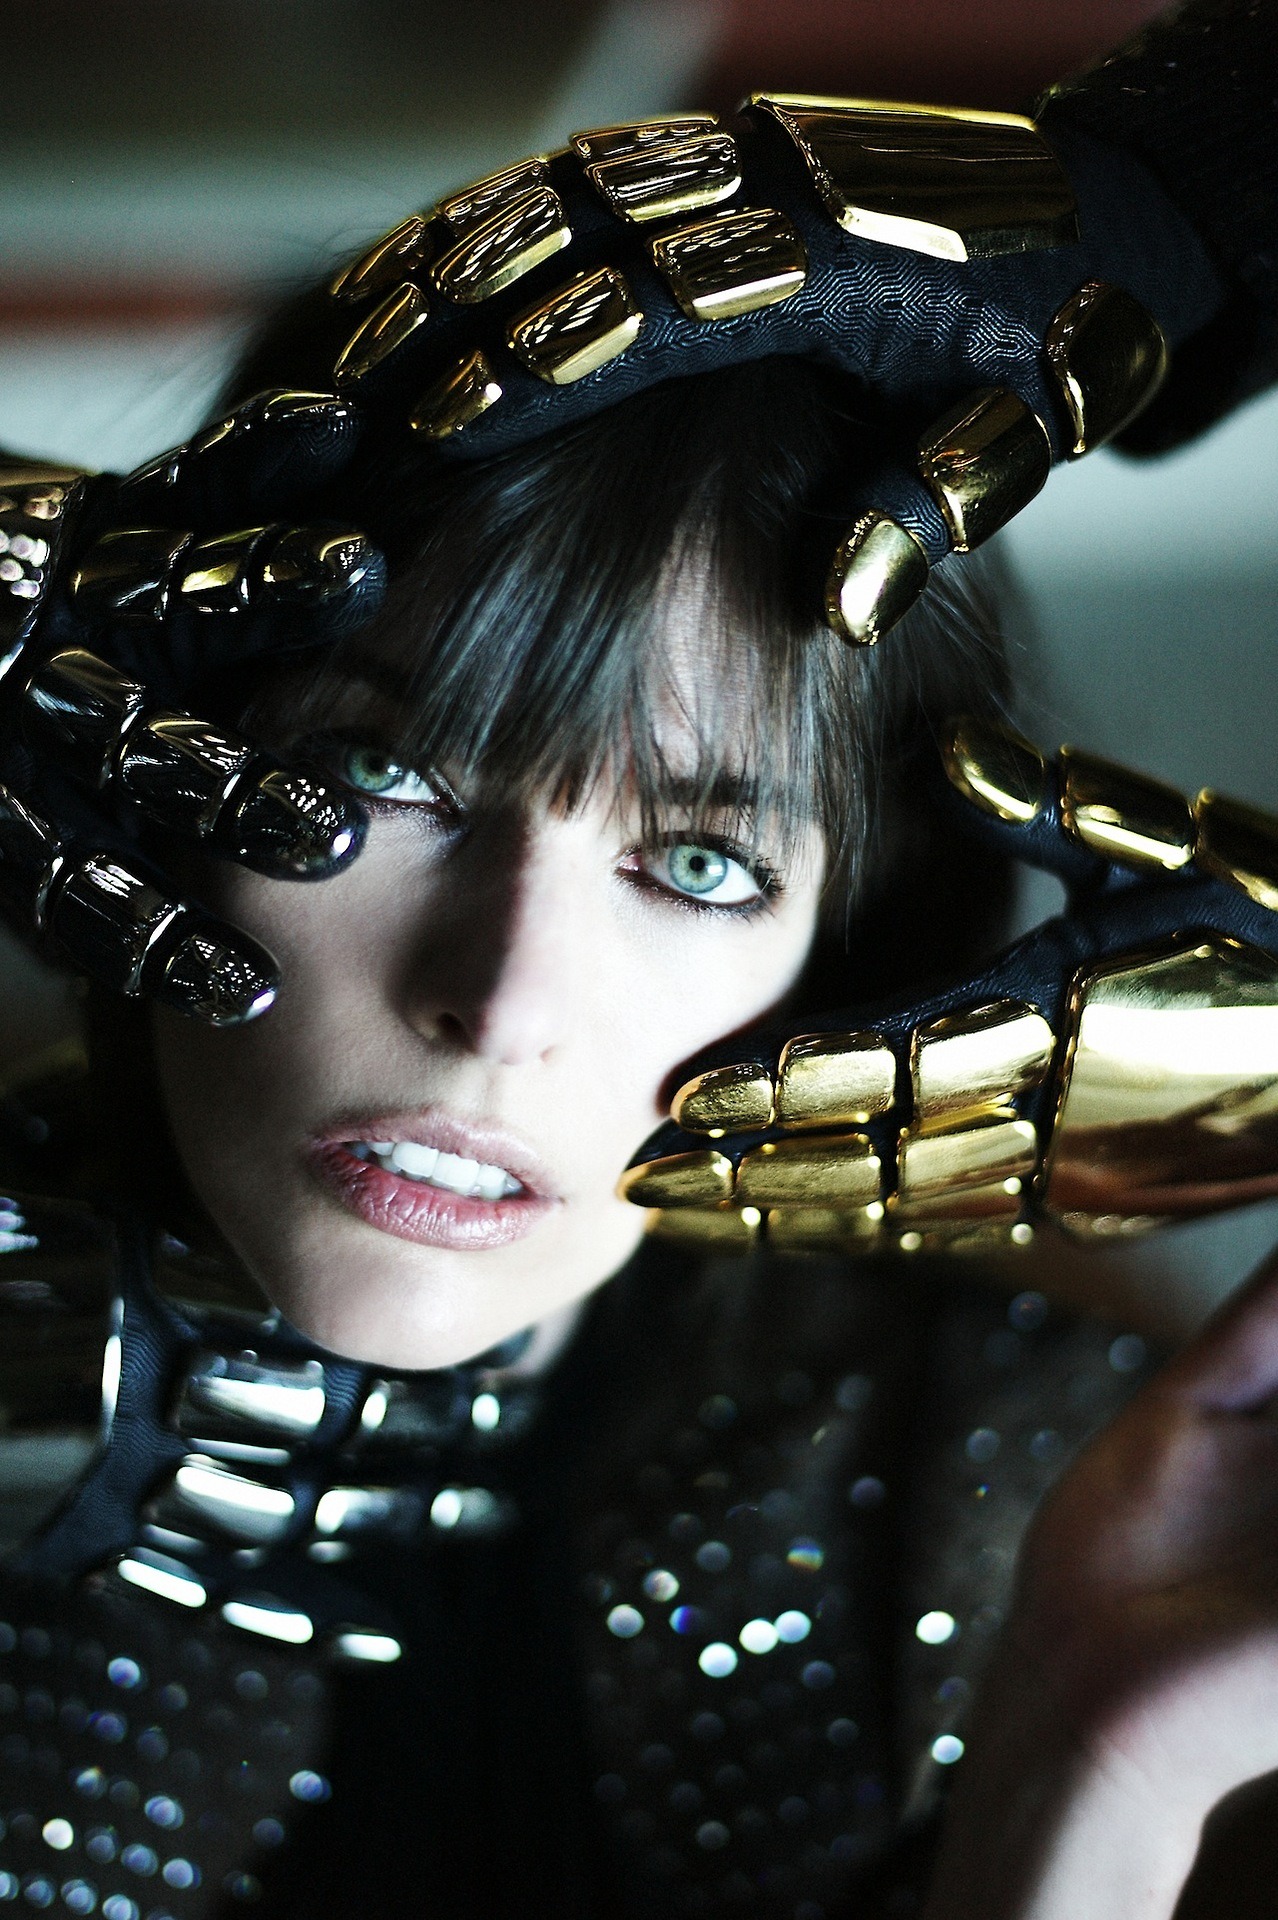 thisgameisrigged:  DIGITAL LOVE - Daft Punk &amp; Milla Jovovich Photos by Mathieu